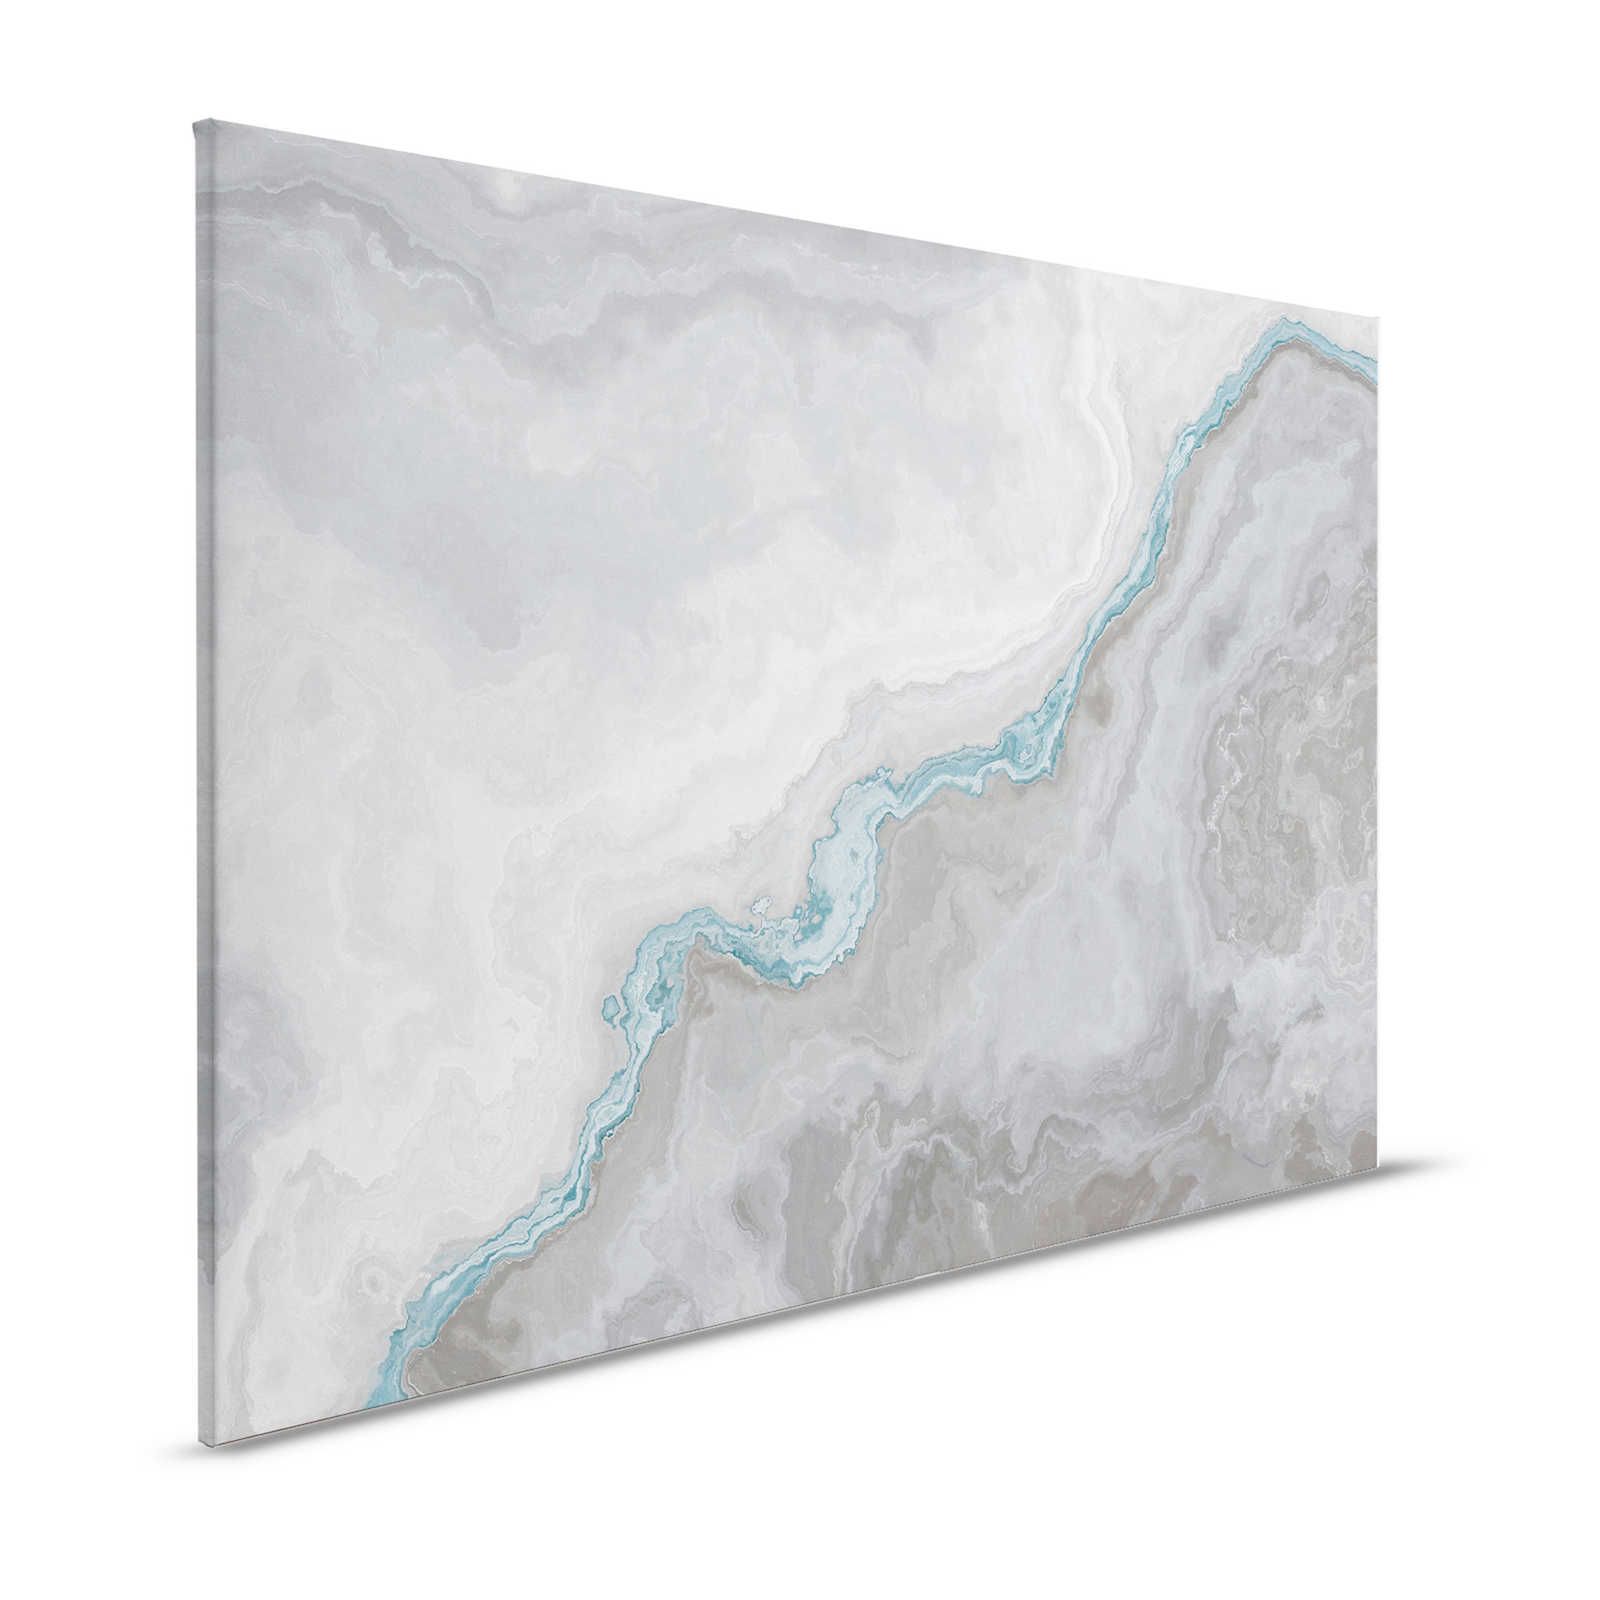 Leinwandbild marmoriert mit Quarz-Optik – 1,20 m x 0,80 m
